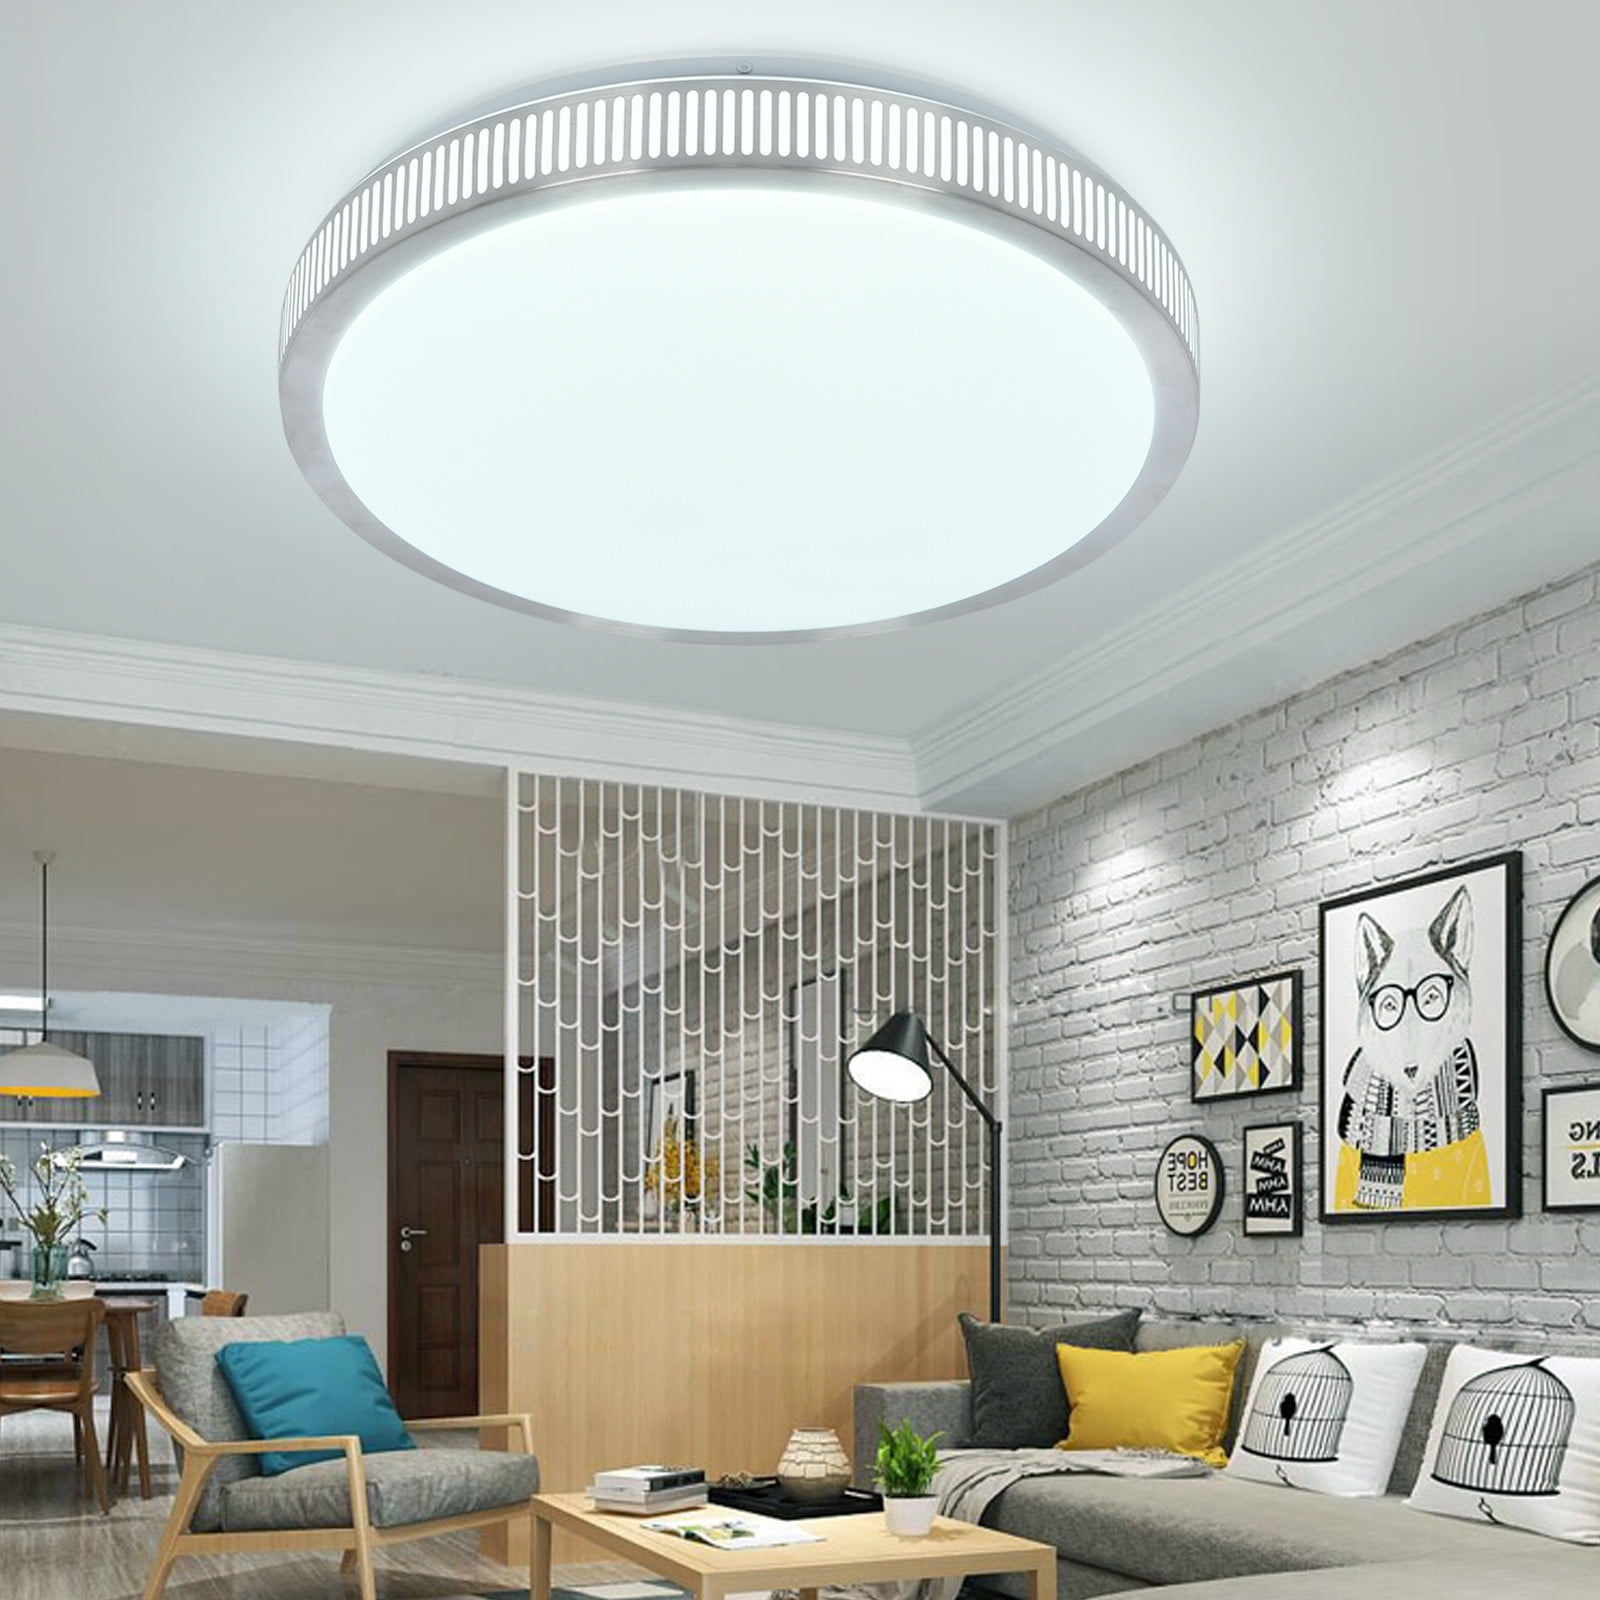 2x 12W LED Ceiling Lights Round Panel Down Light Living Room Bathroom Wall Lamp 